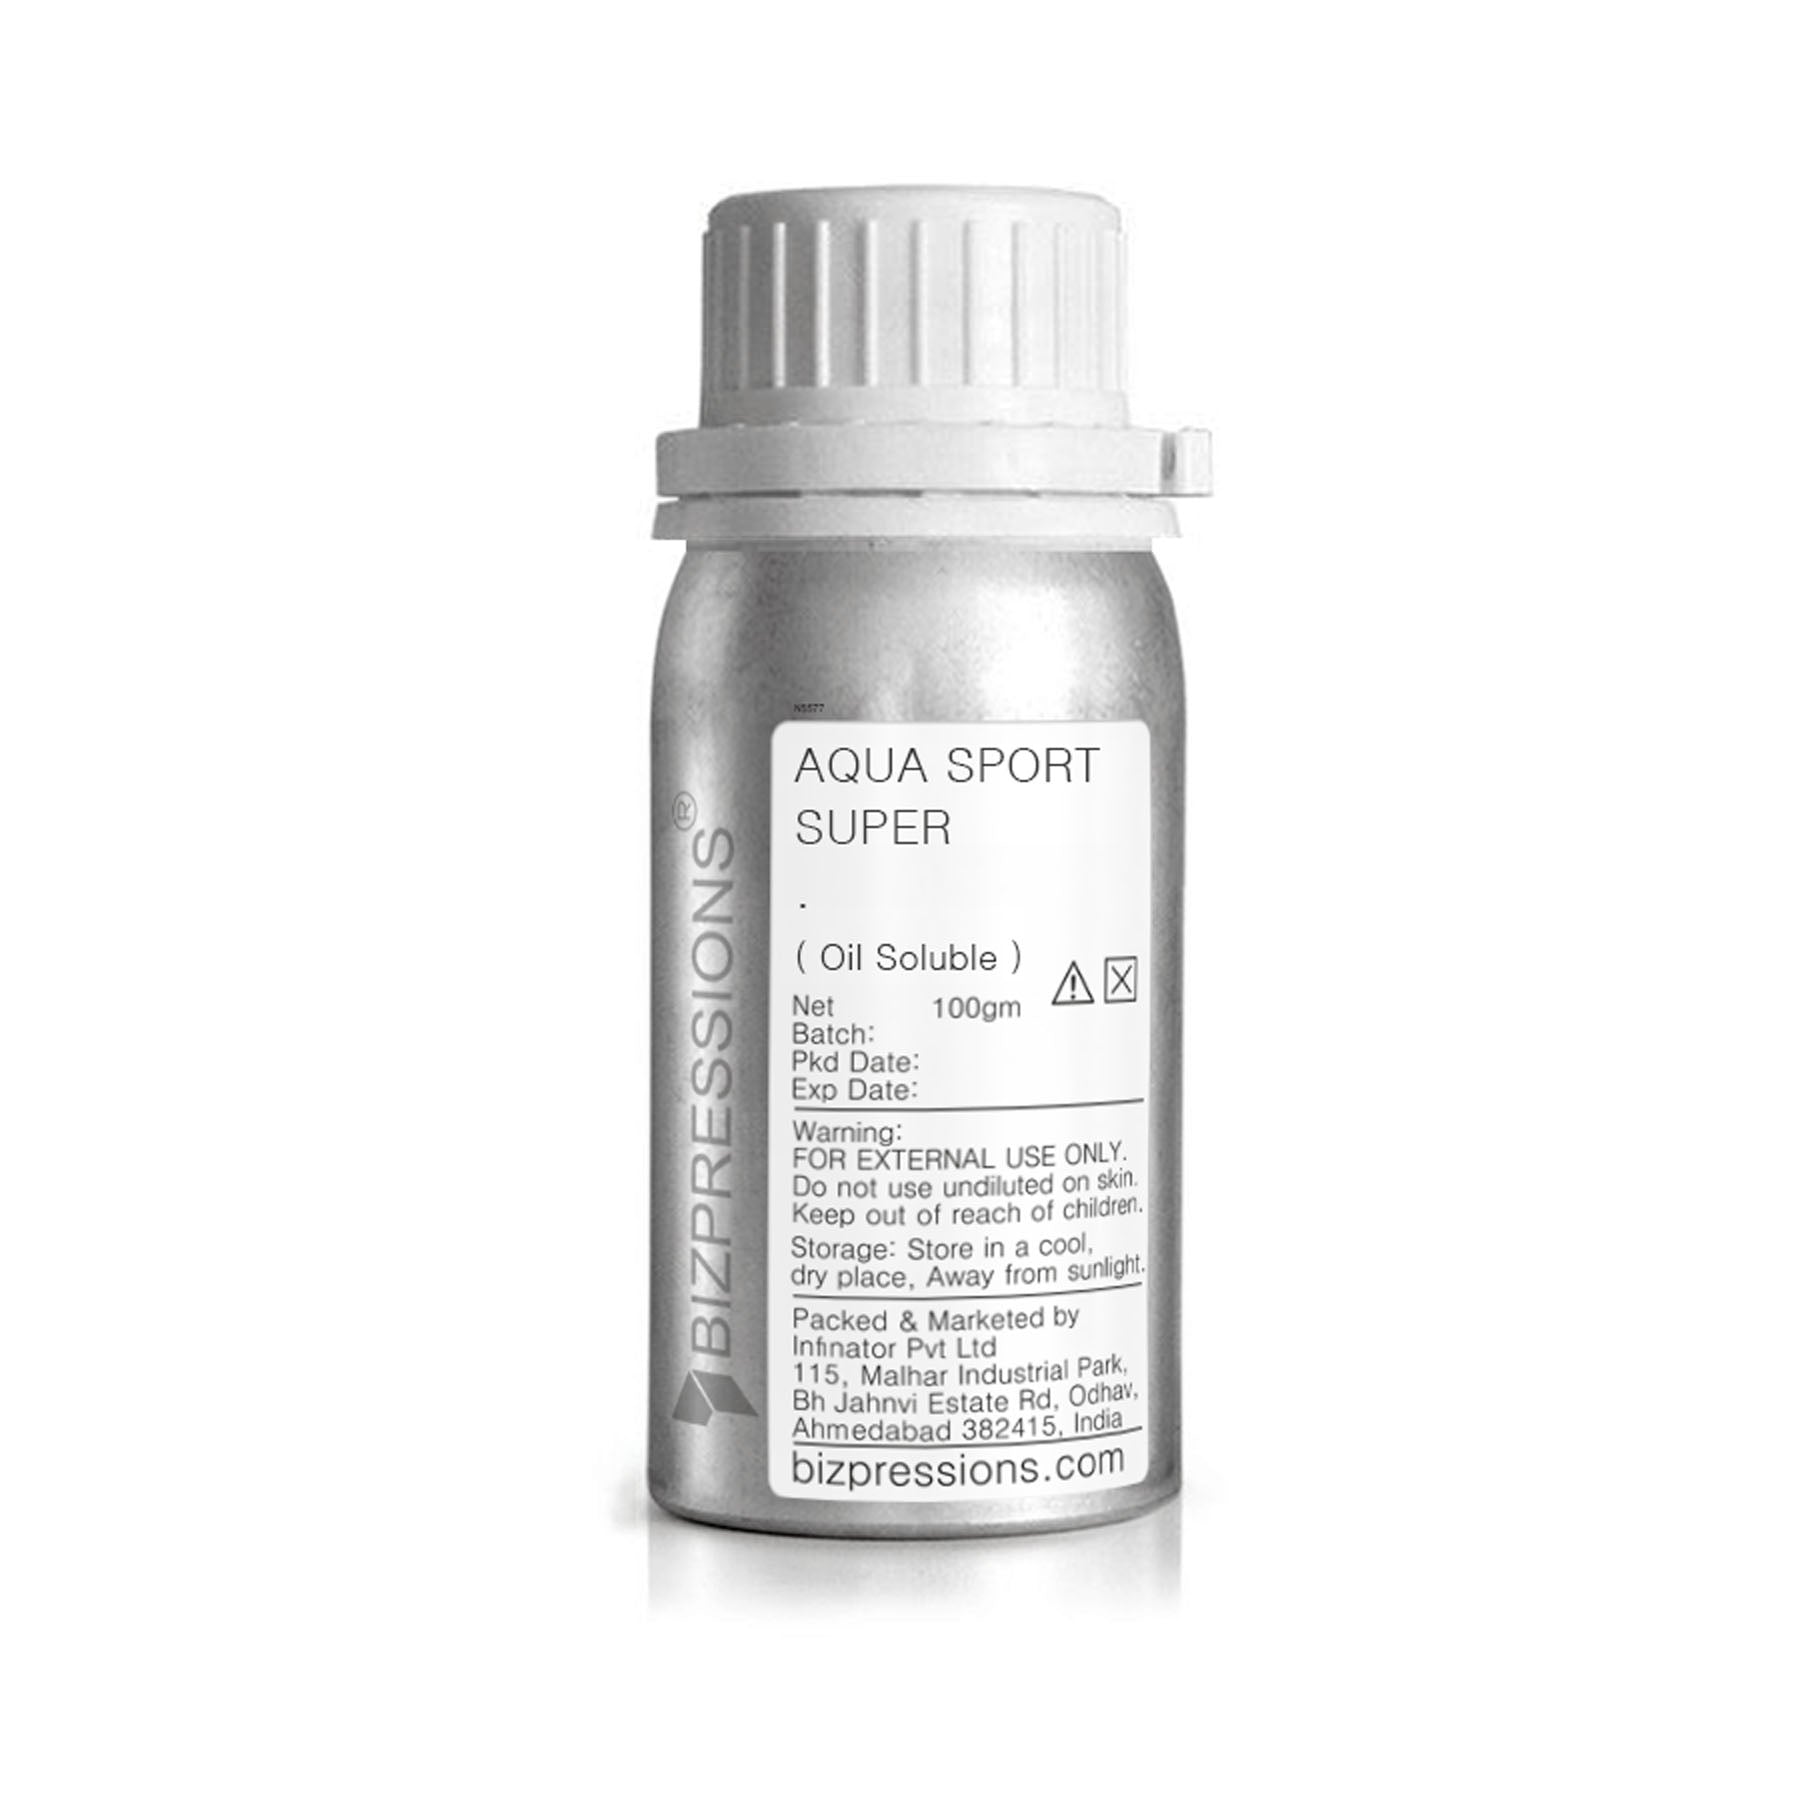 AQUA SPORT SUPER - Fragrance ( Oil Soluble ) - 100 gm